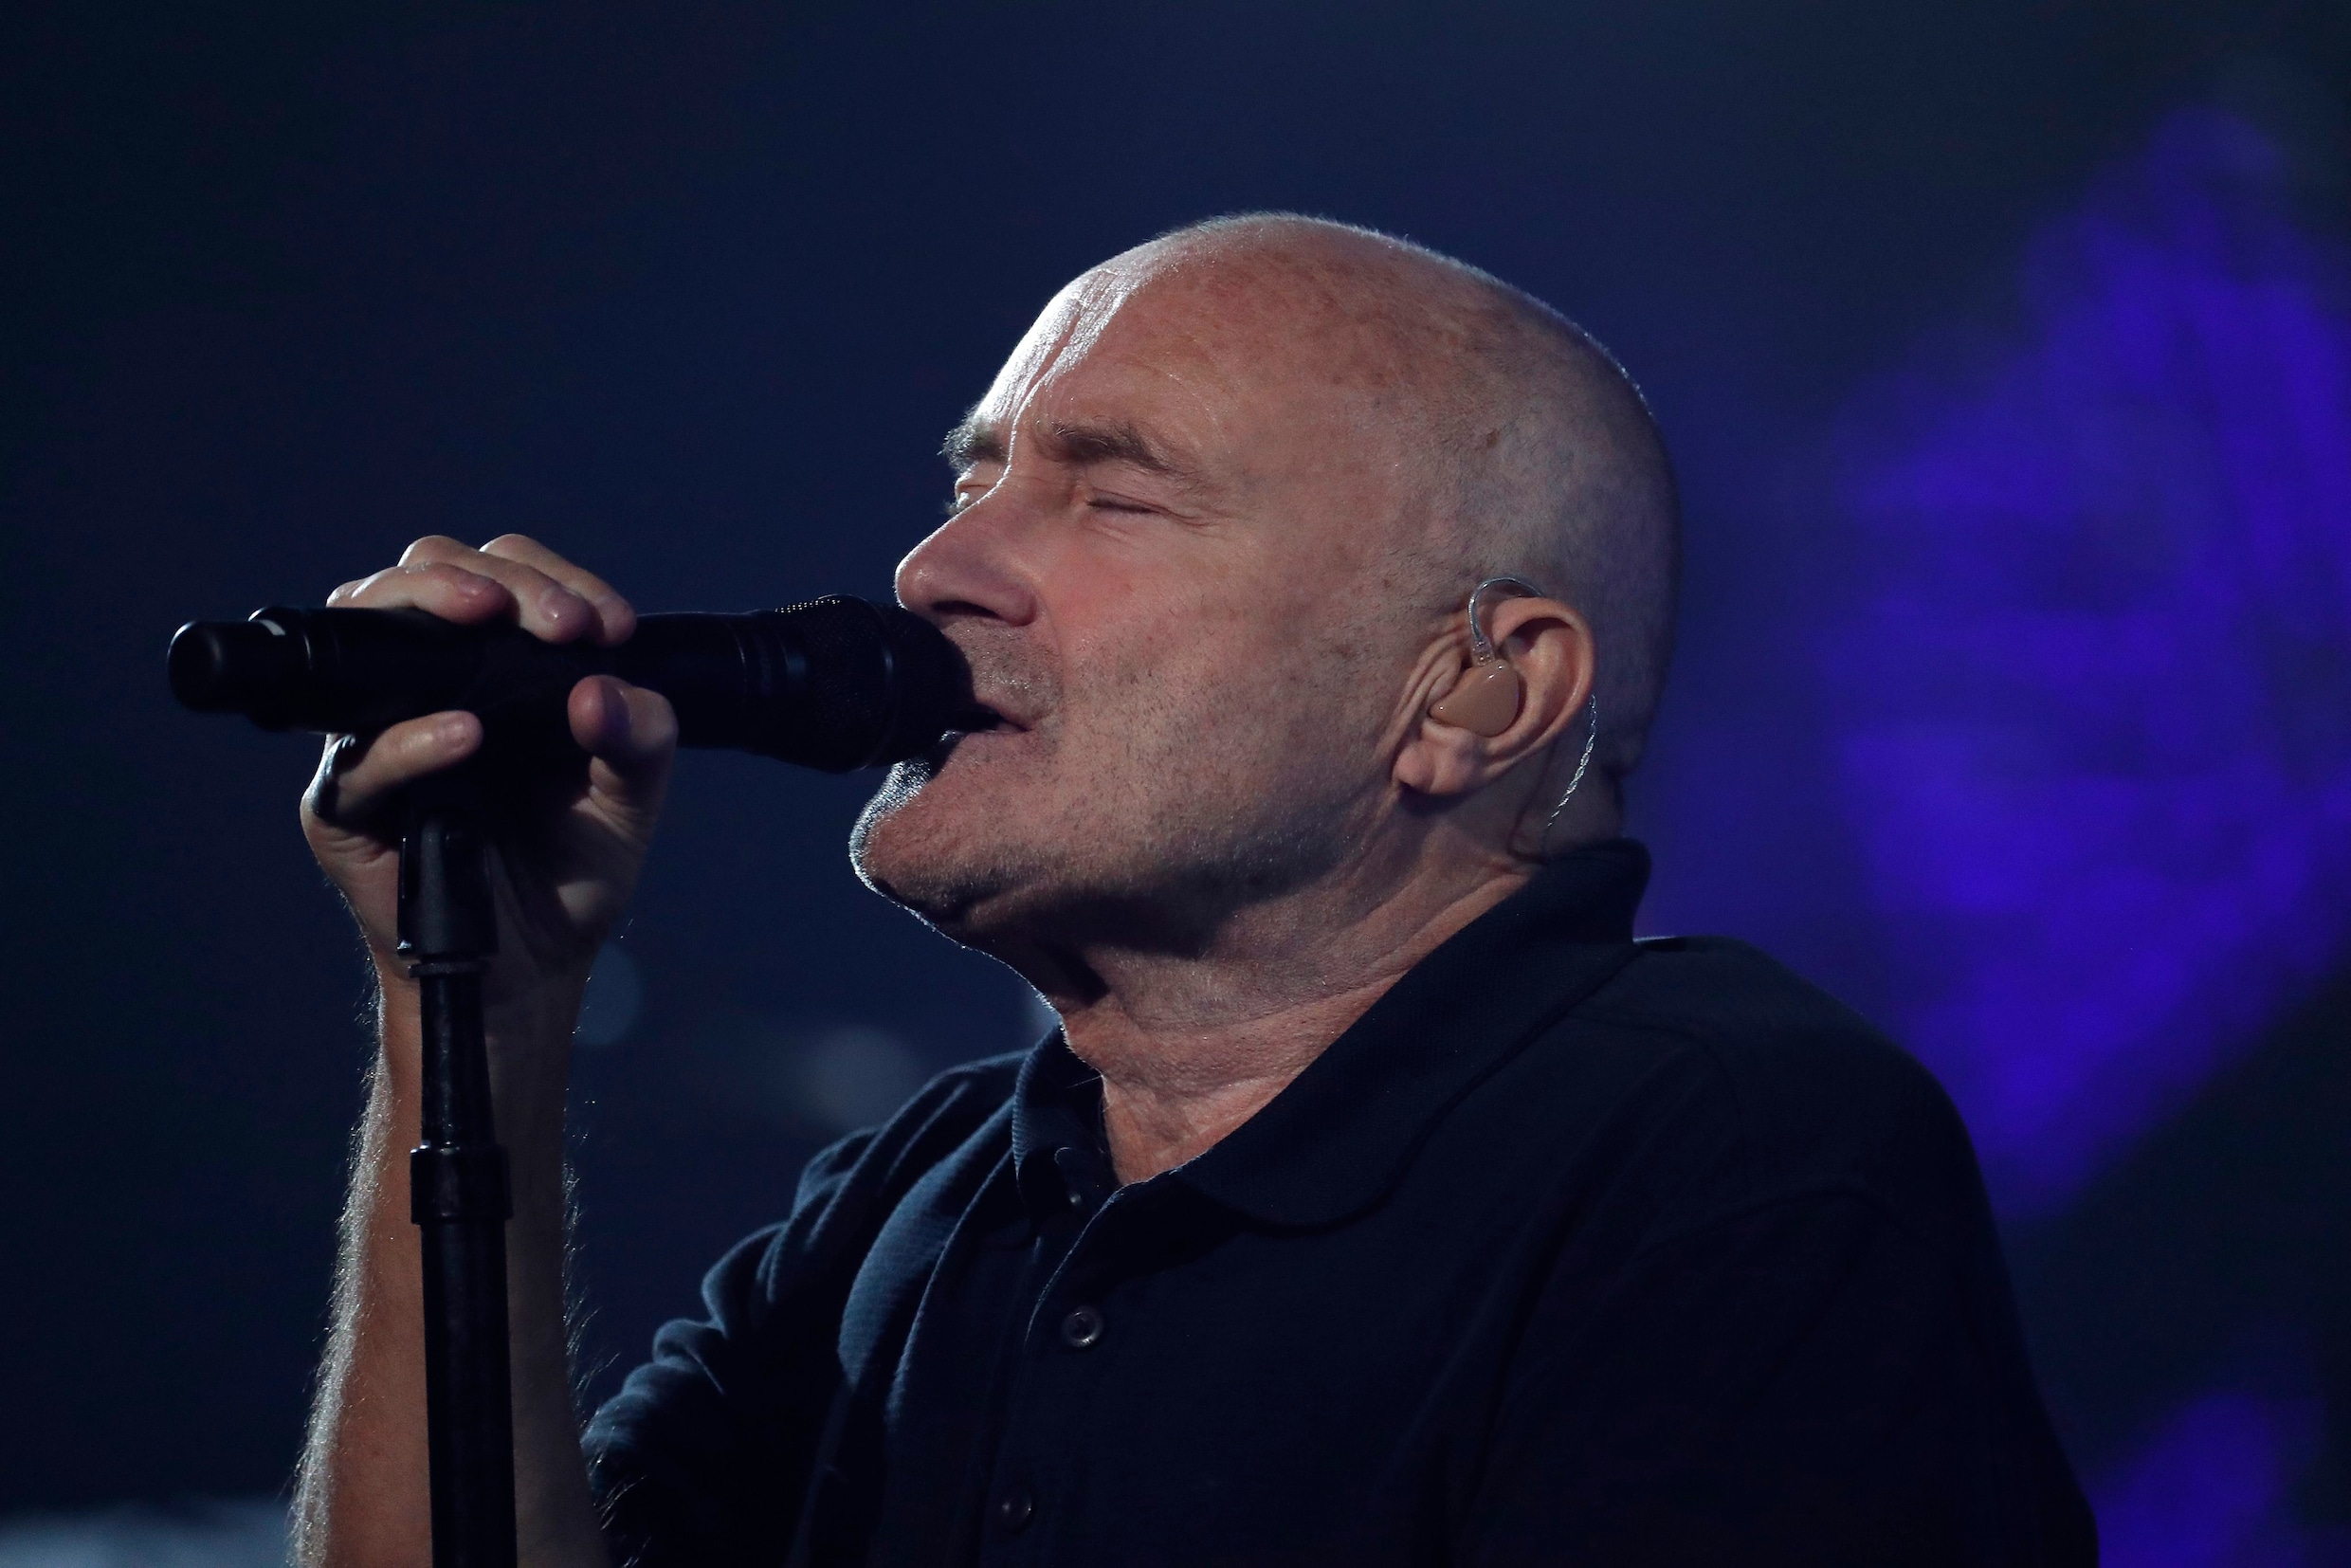 Phil Collins keert terug uit pensioen, met stem, hits én wandelstok